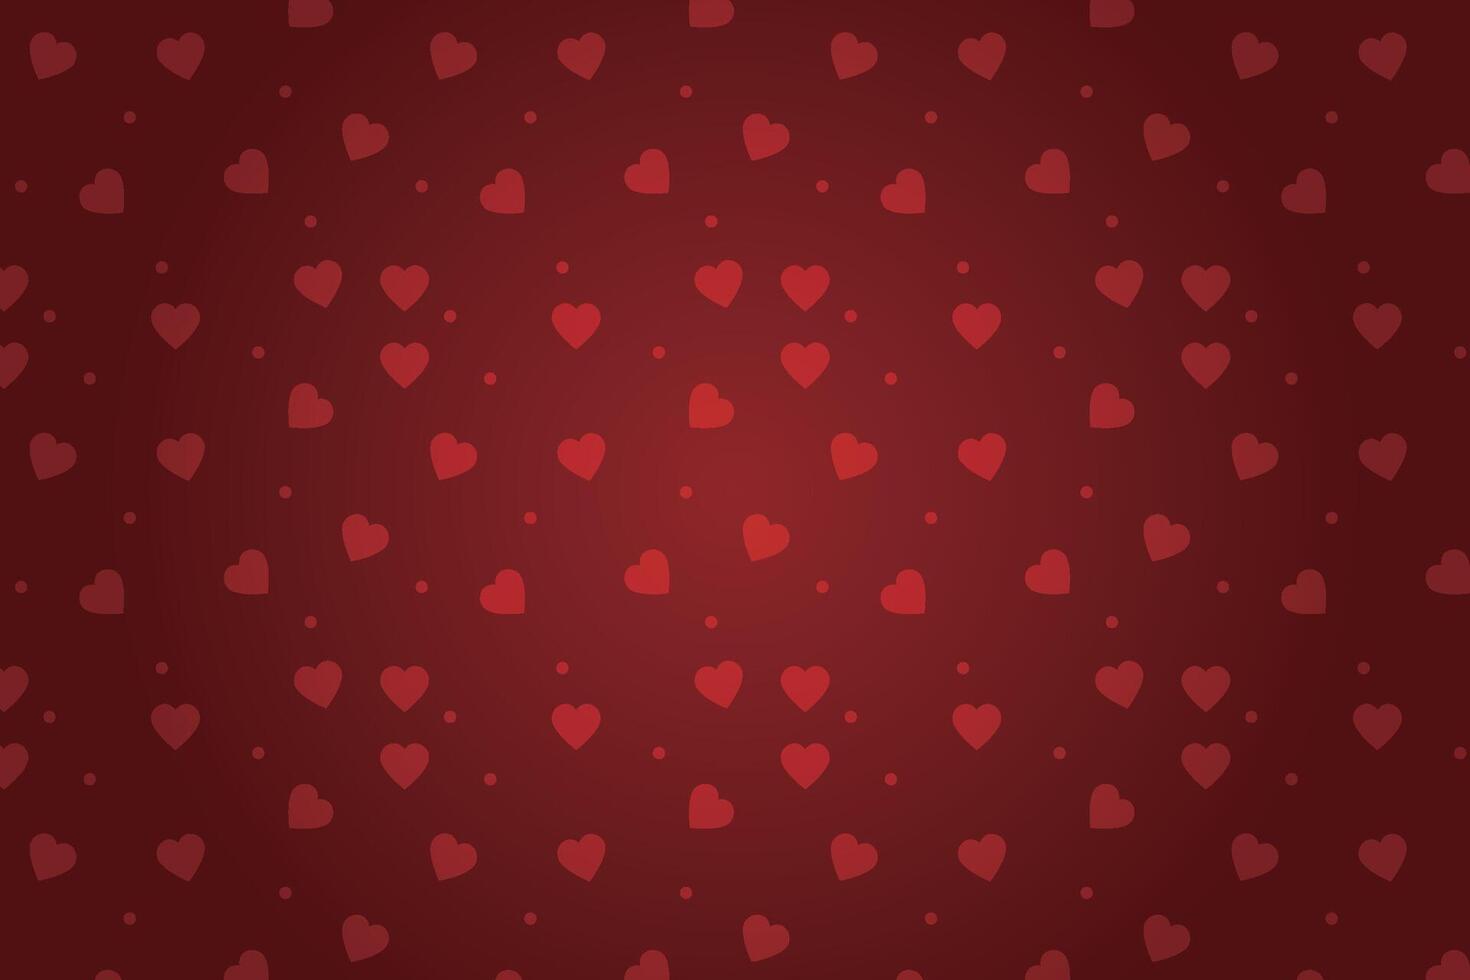 vector amor corazón patrón, vector mano dibujado San Valentín día modelo